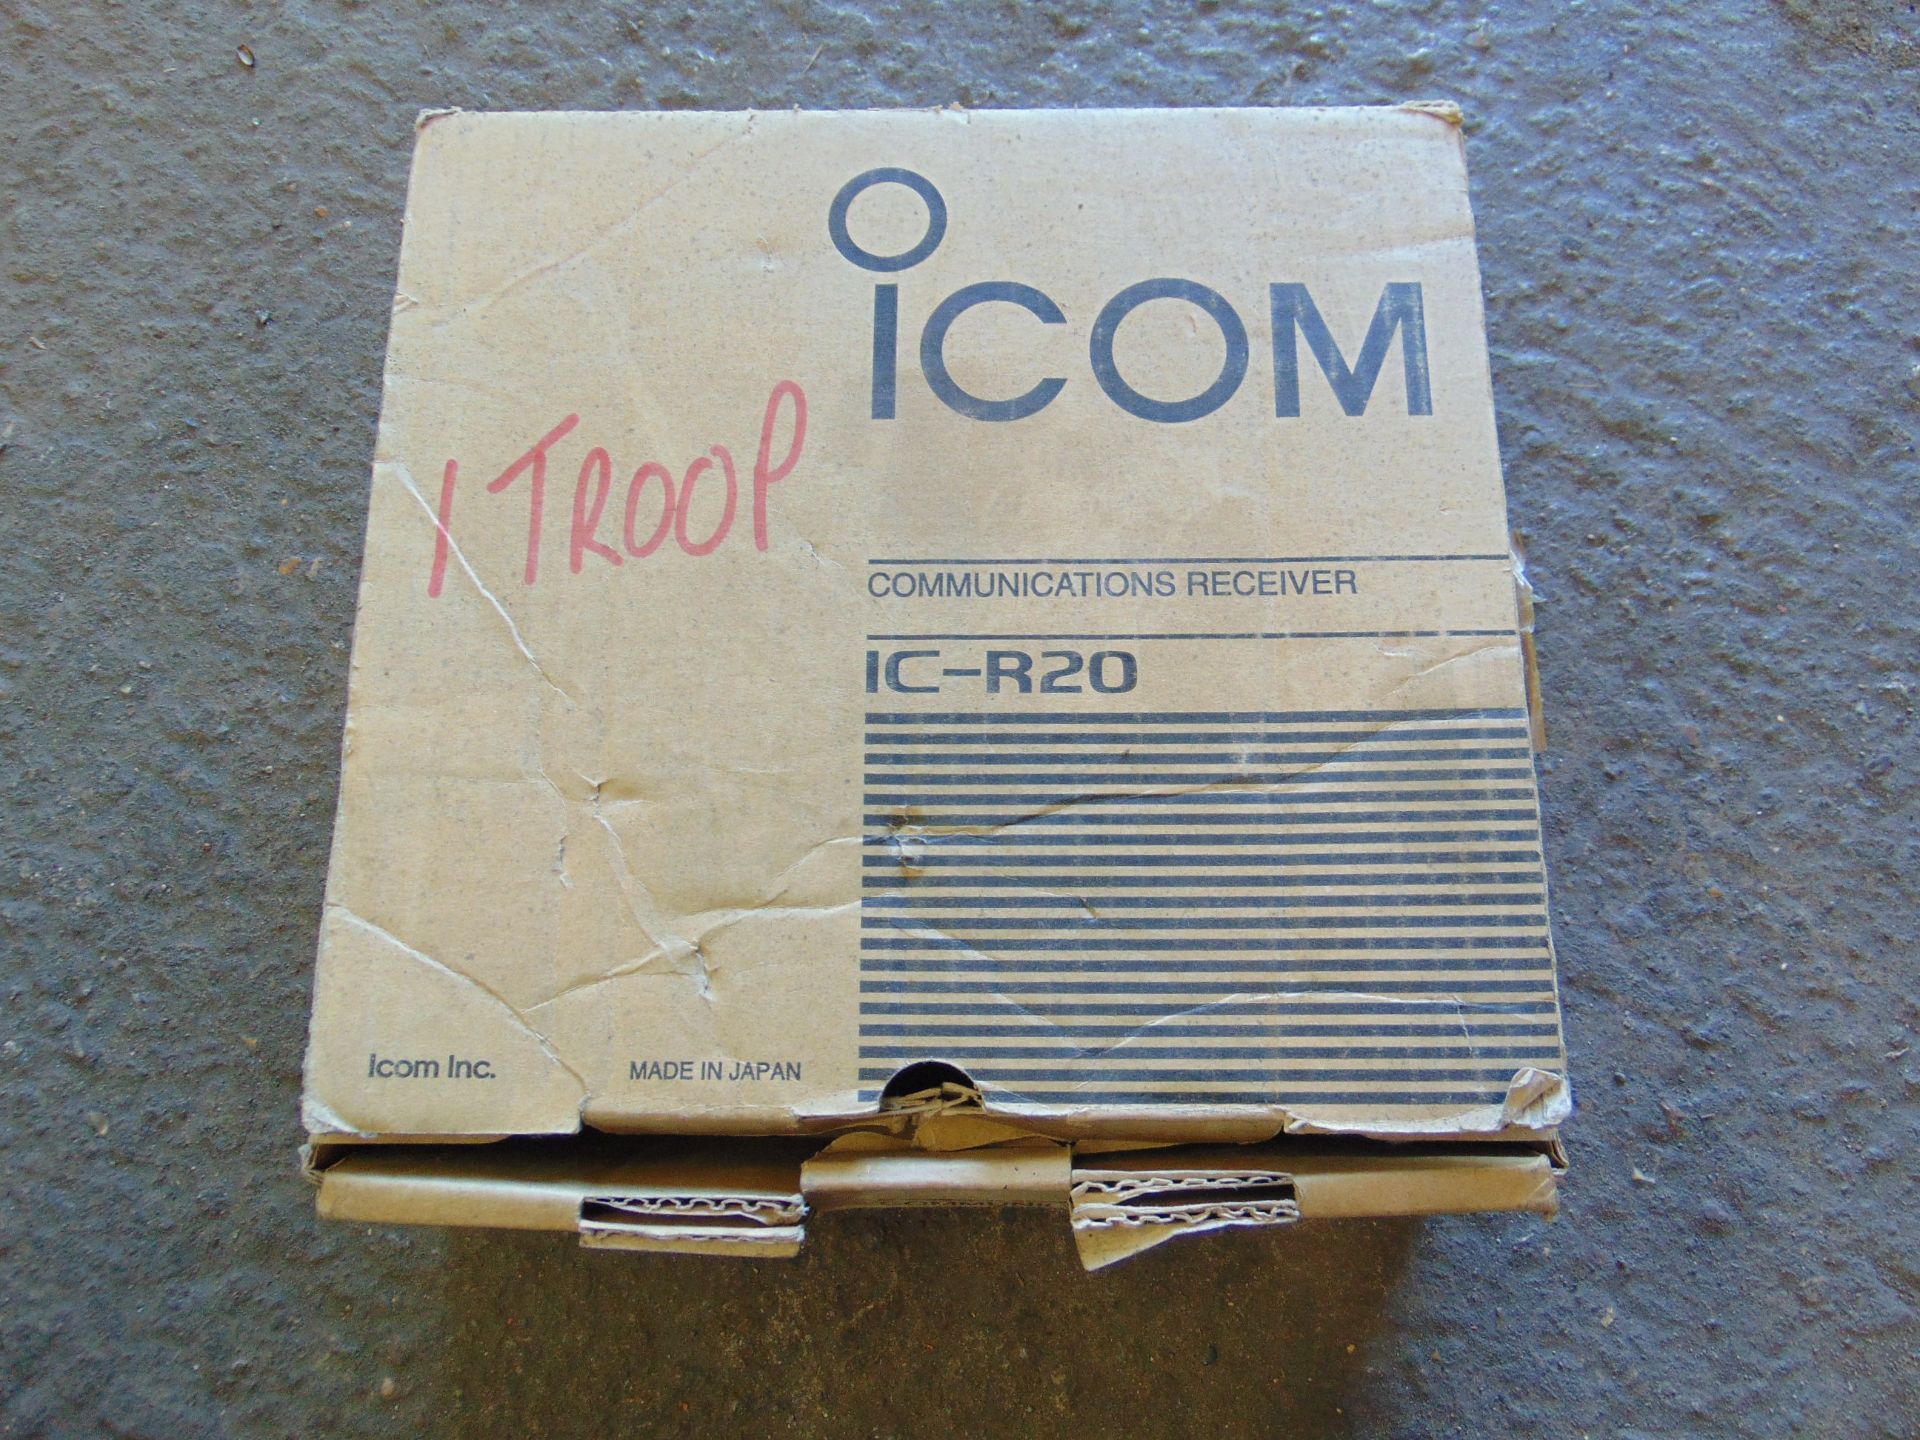 2 x ICOM R20 Coms Receivers Hand Held - Bild 4 aus 4